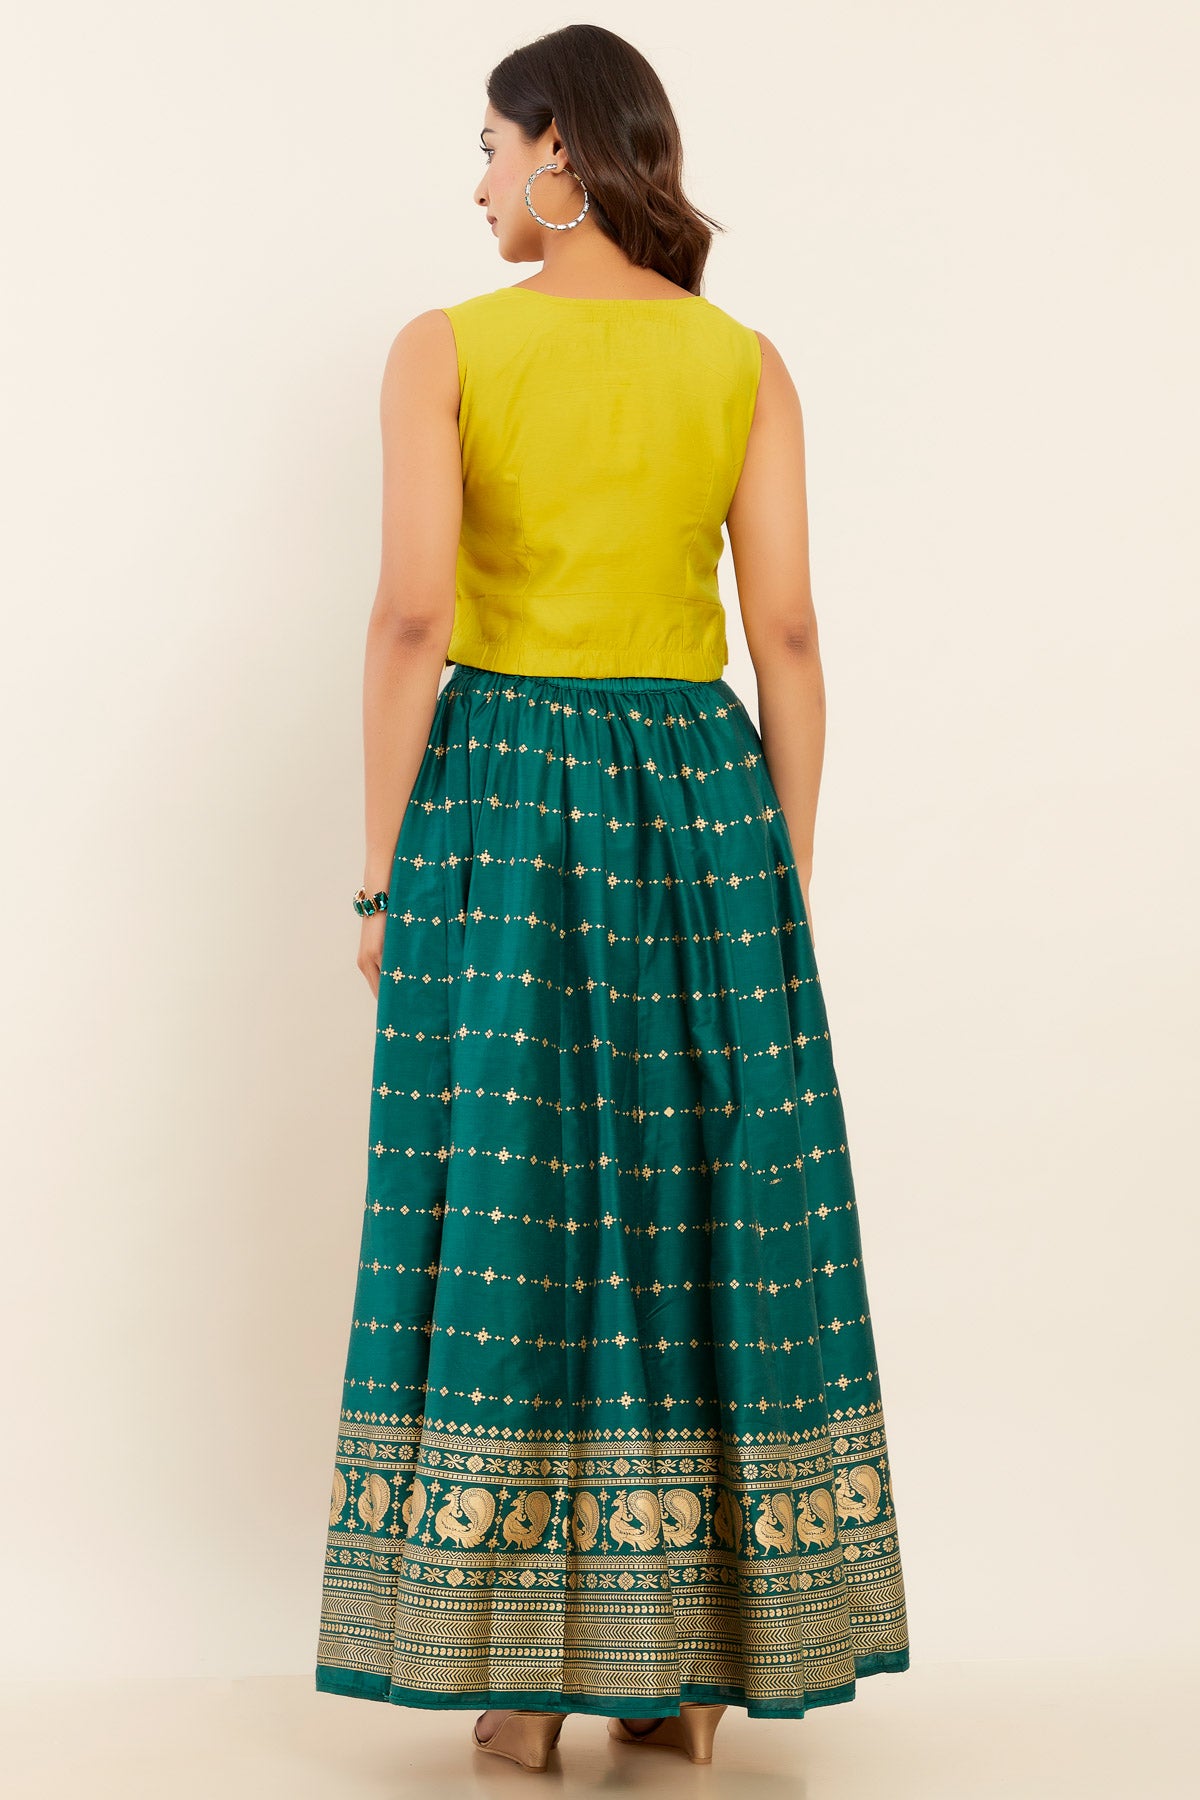 Peacock Motif Embroidered Crop Top & Geometric Printed Skirt Set - Yellow & Green